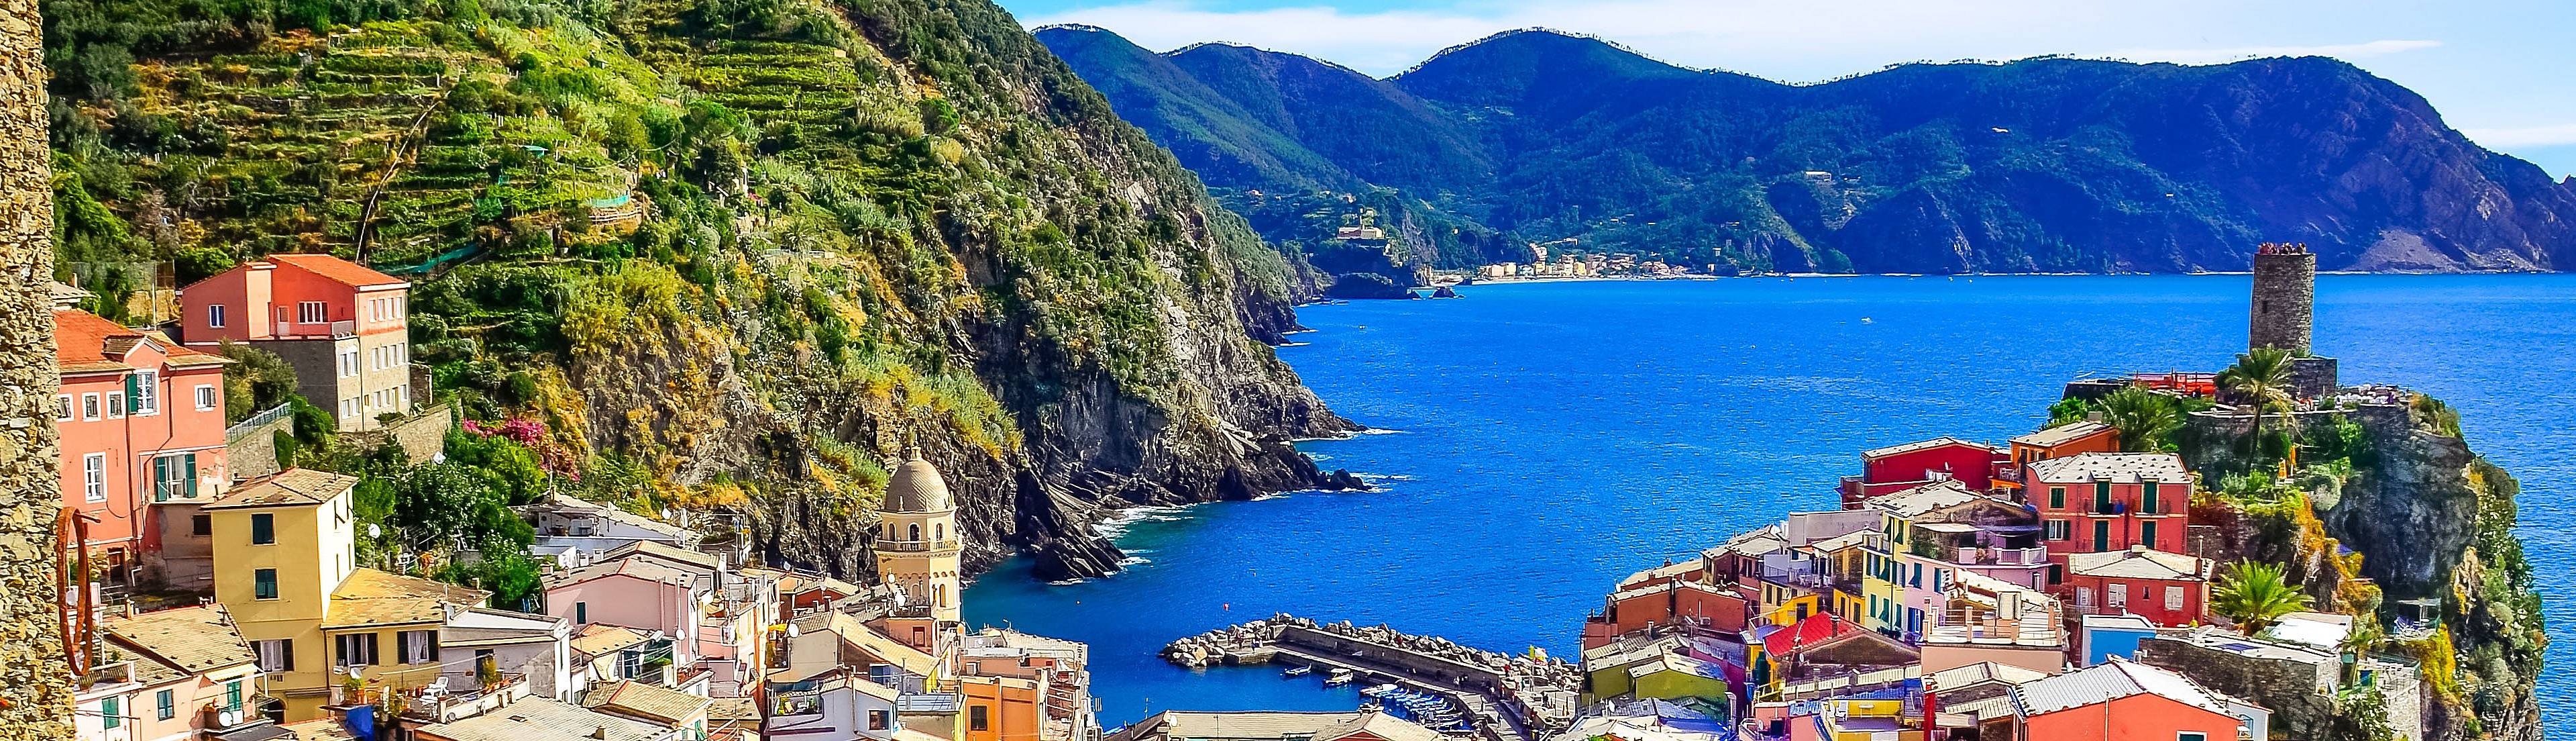 Viajes a Italia en otoño a medida